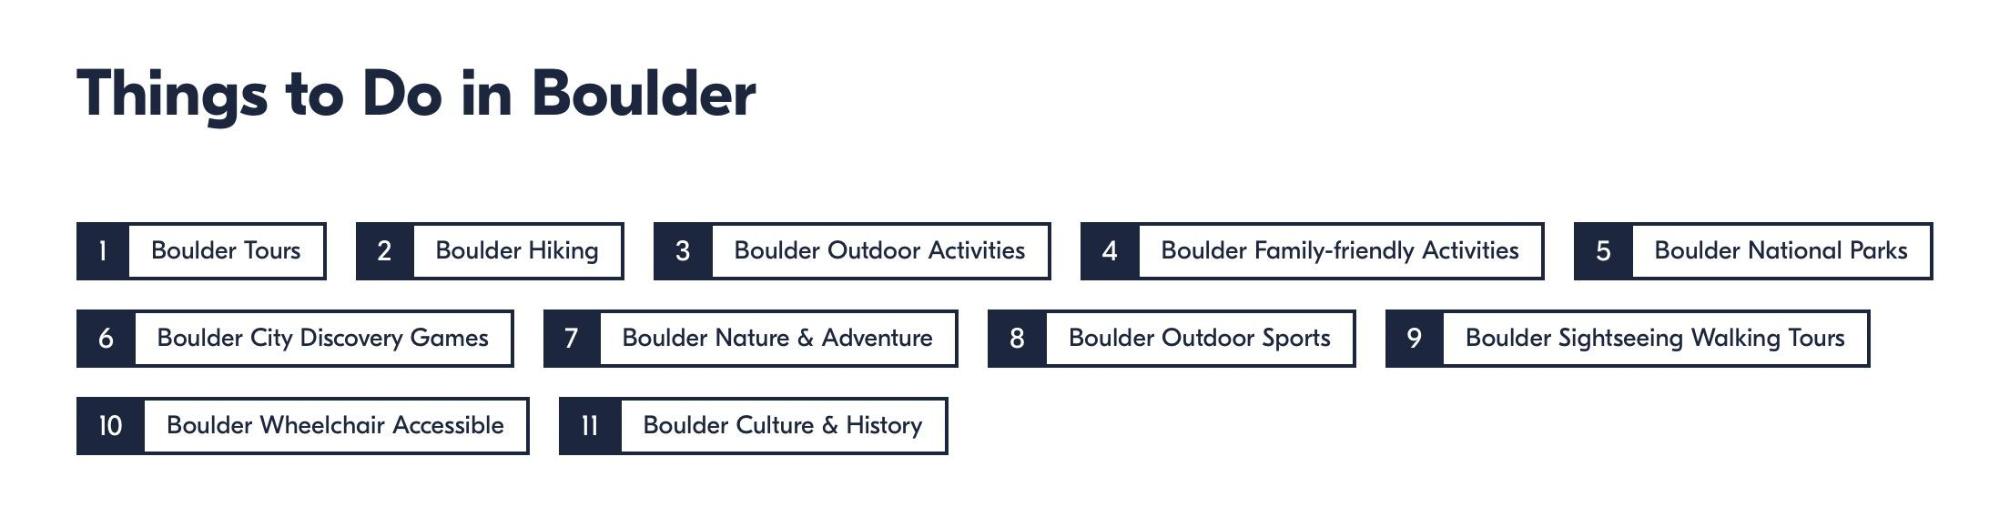 Boulder 当前处于活动状态的类别—自动内链示例